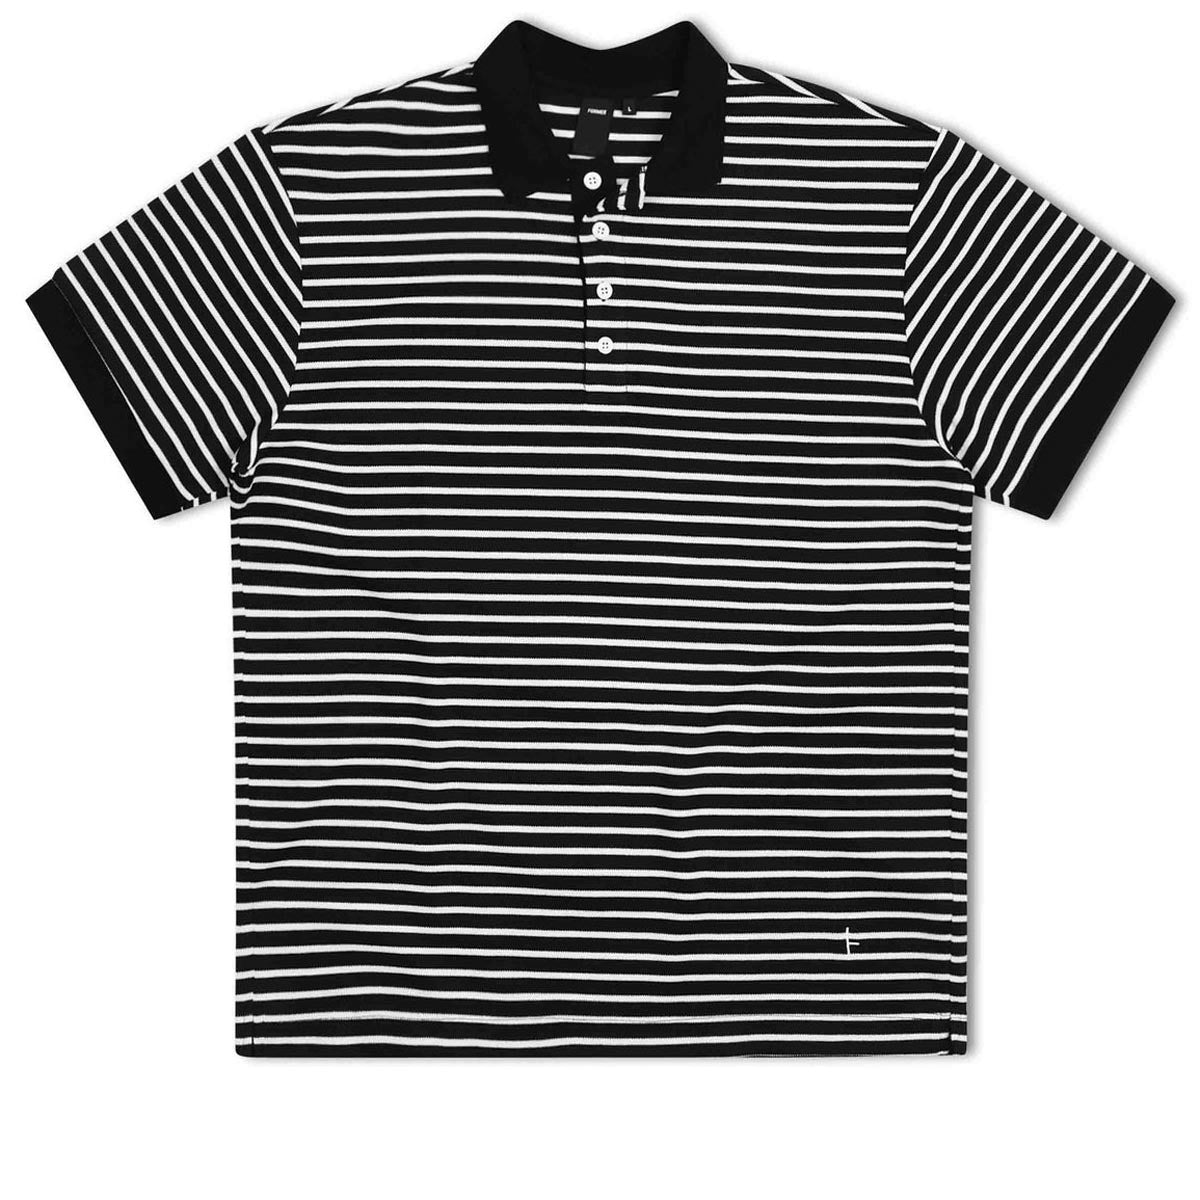 Former Uniform Striped Polo Shirt - Worn Black/White image 3